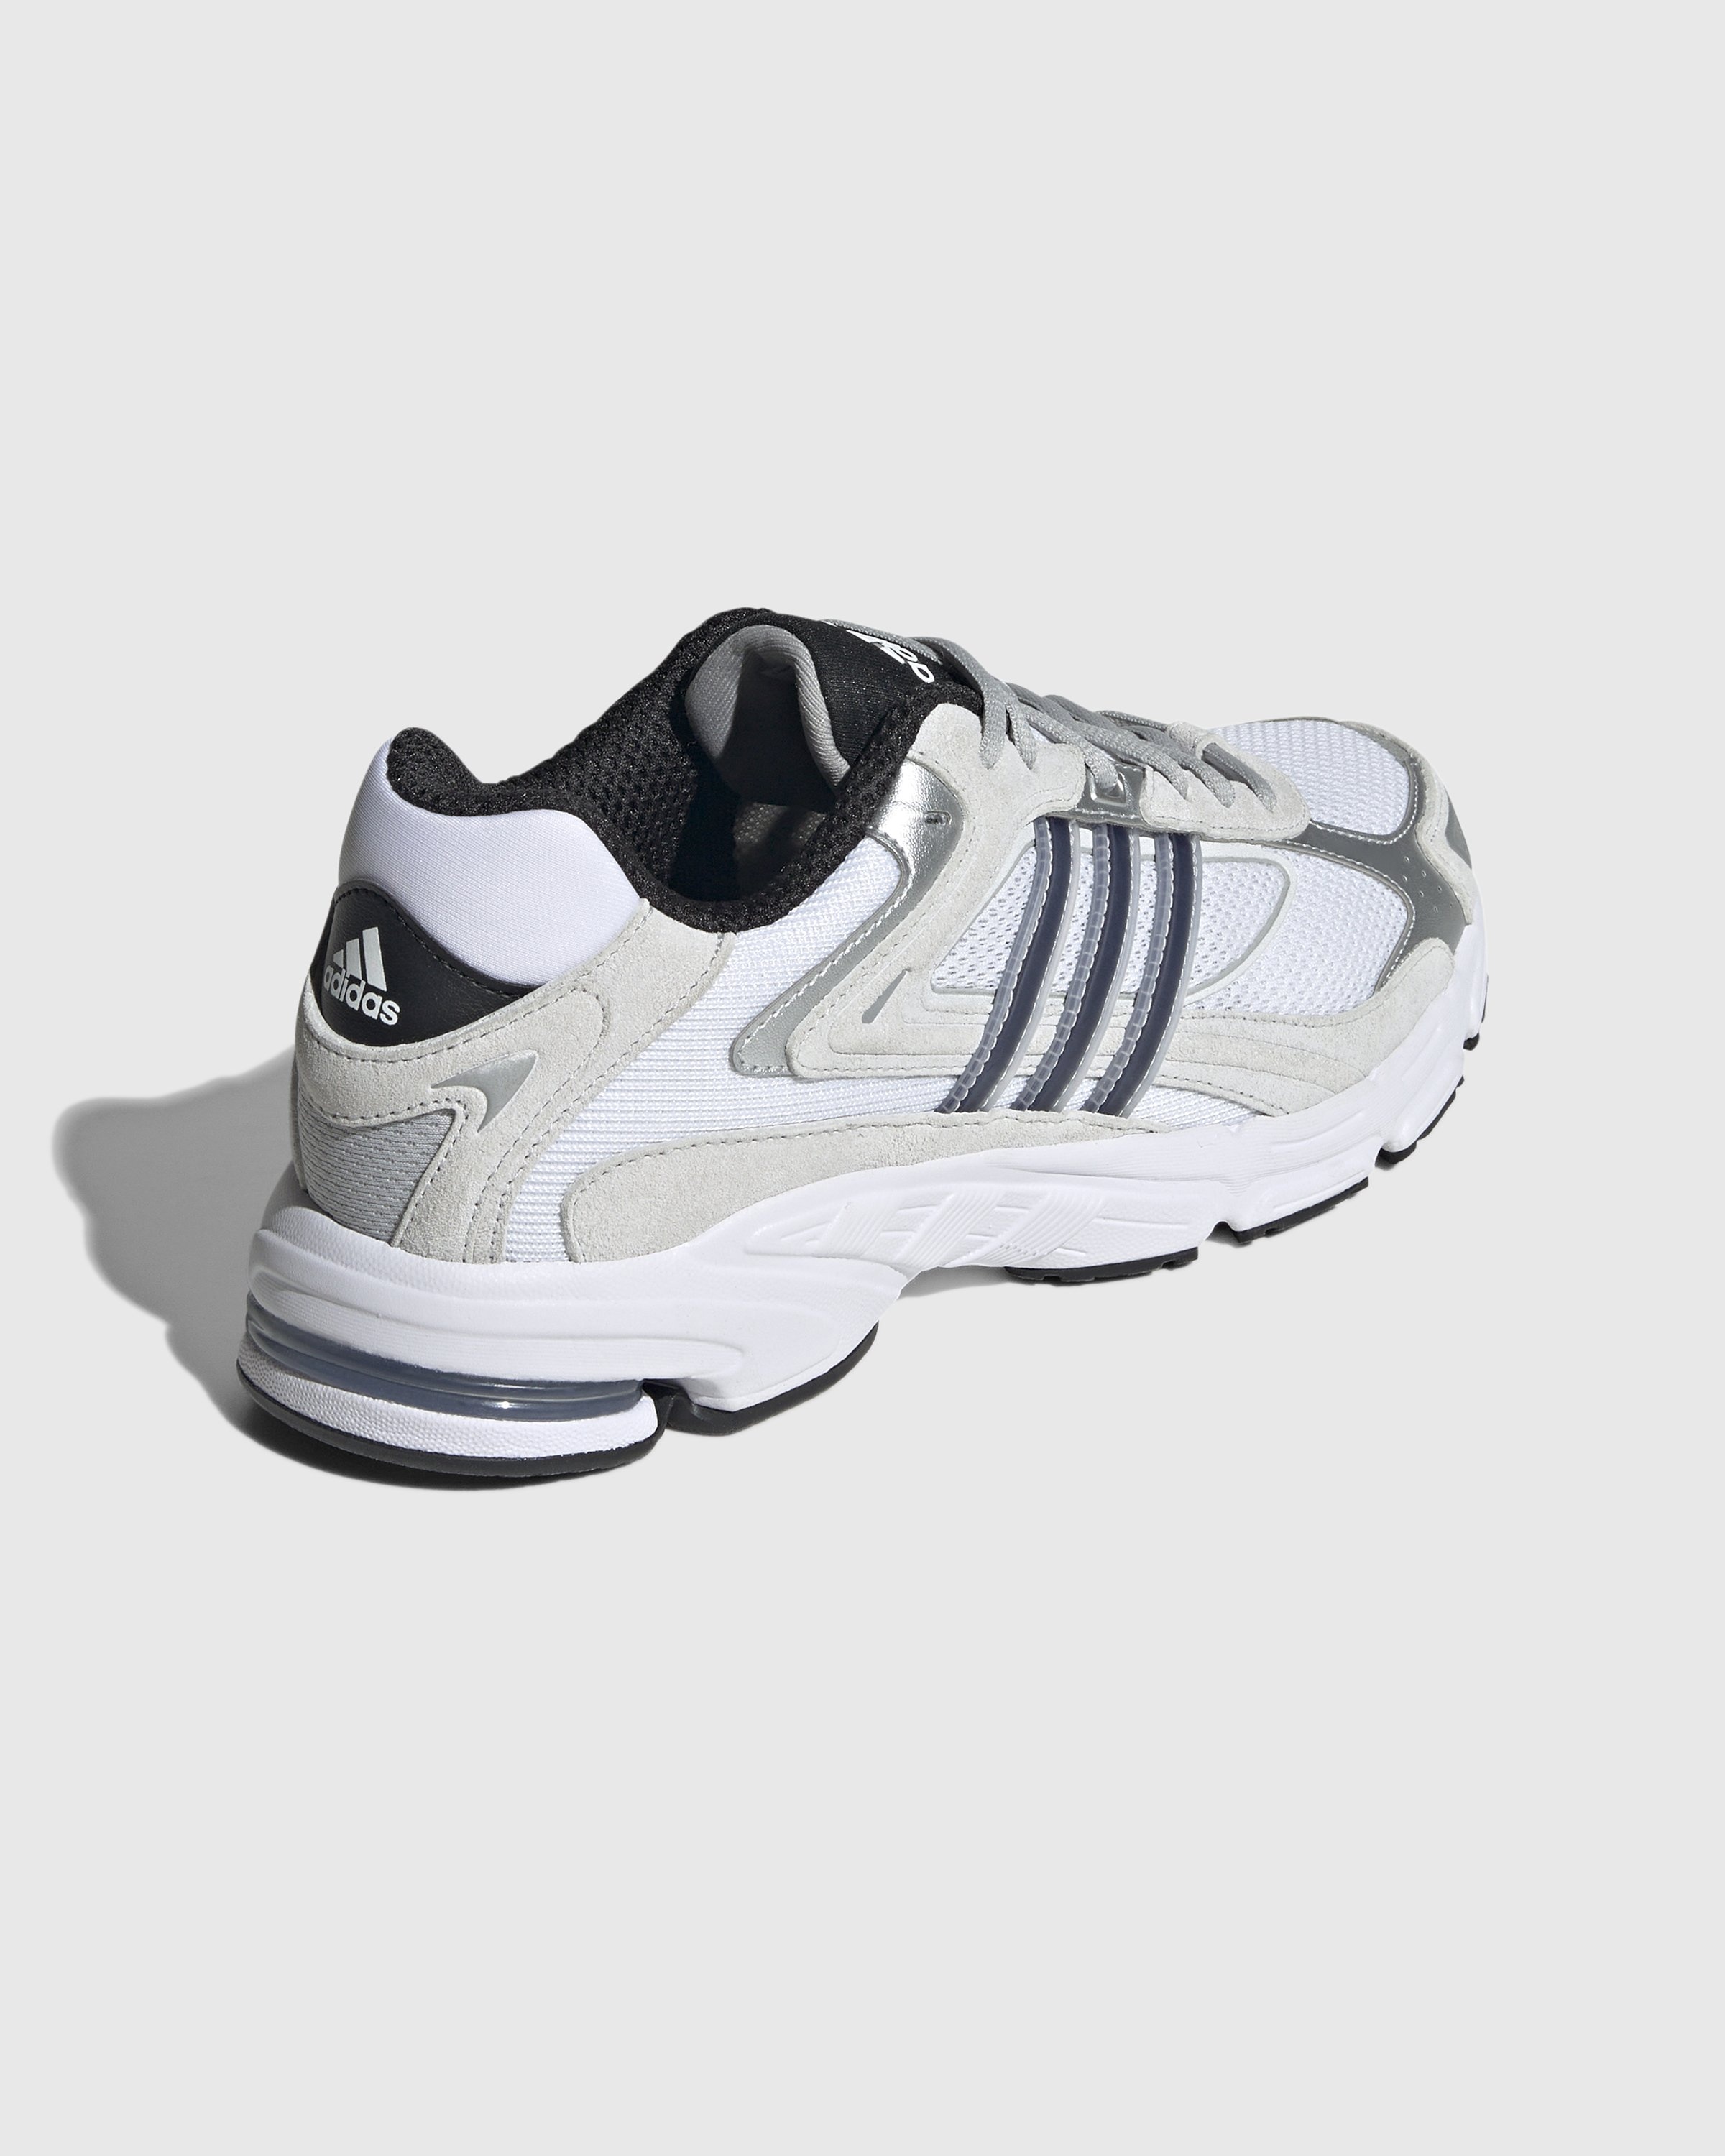 Adidas – CL White/Black Response | Highsnobiety Shop